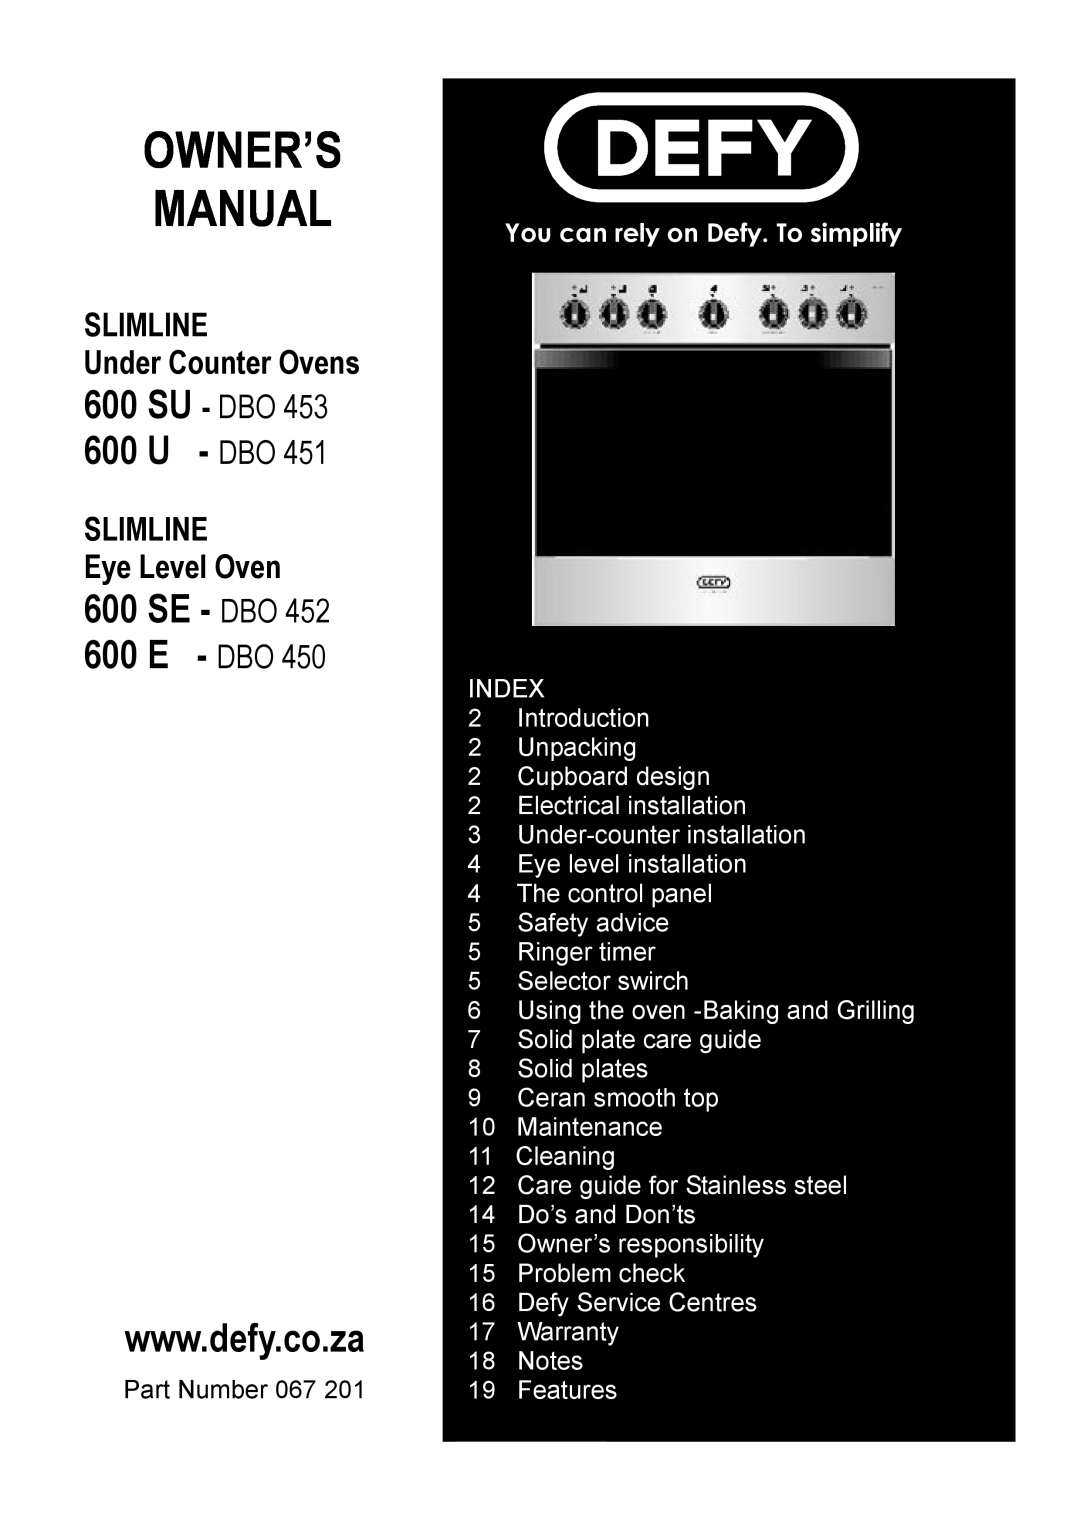 Defy Appliances 600 E - DBO 450, 600 SE - DBO 452, 600 SU - DBO 453 manual 2.02, #$ % #& $% + %, #44 -4$, .*$% 05$ 